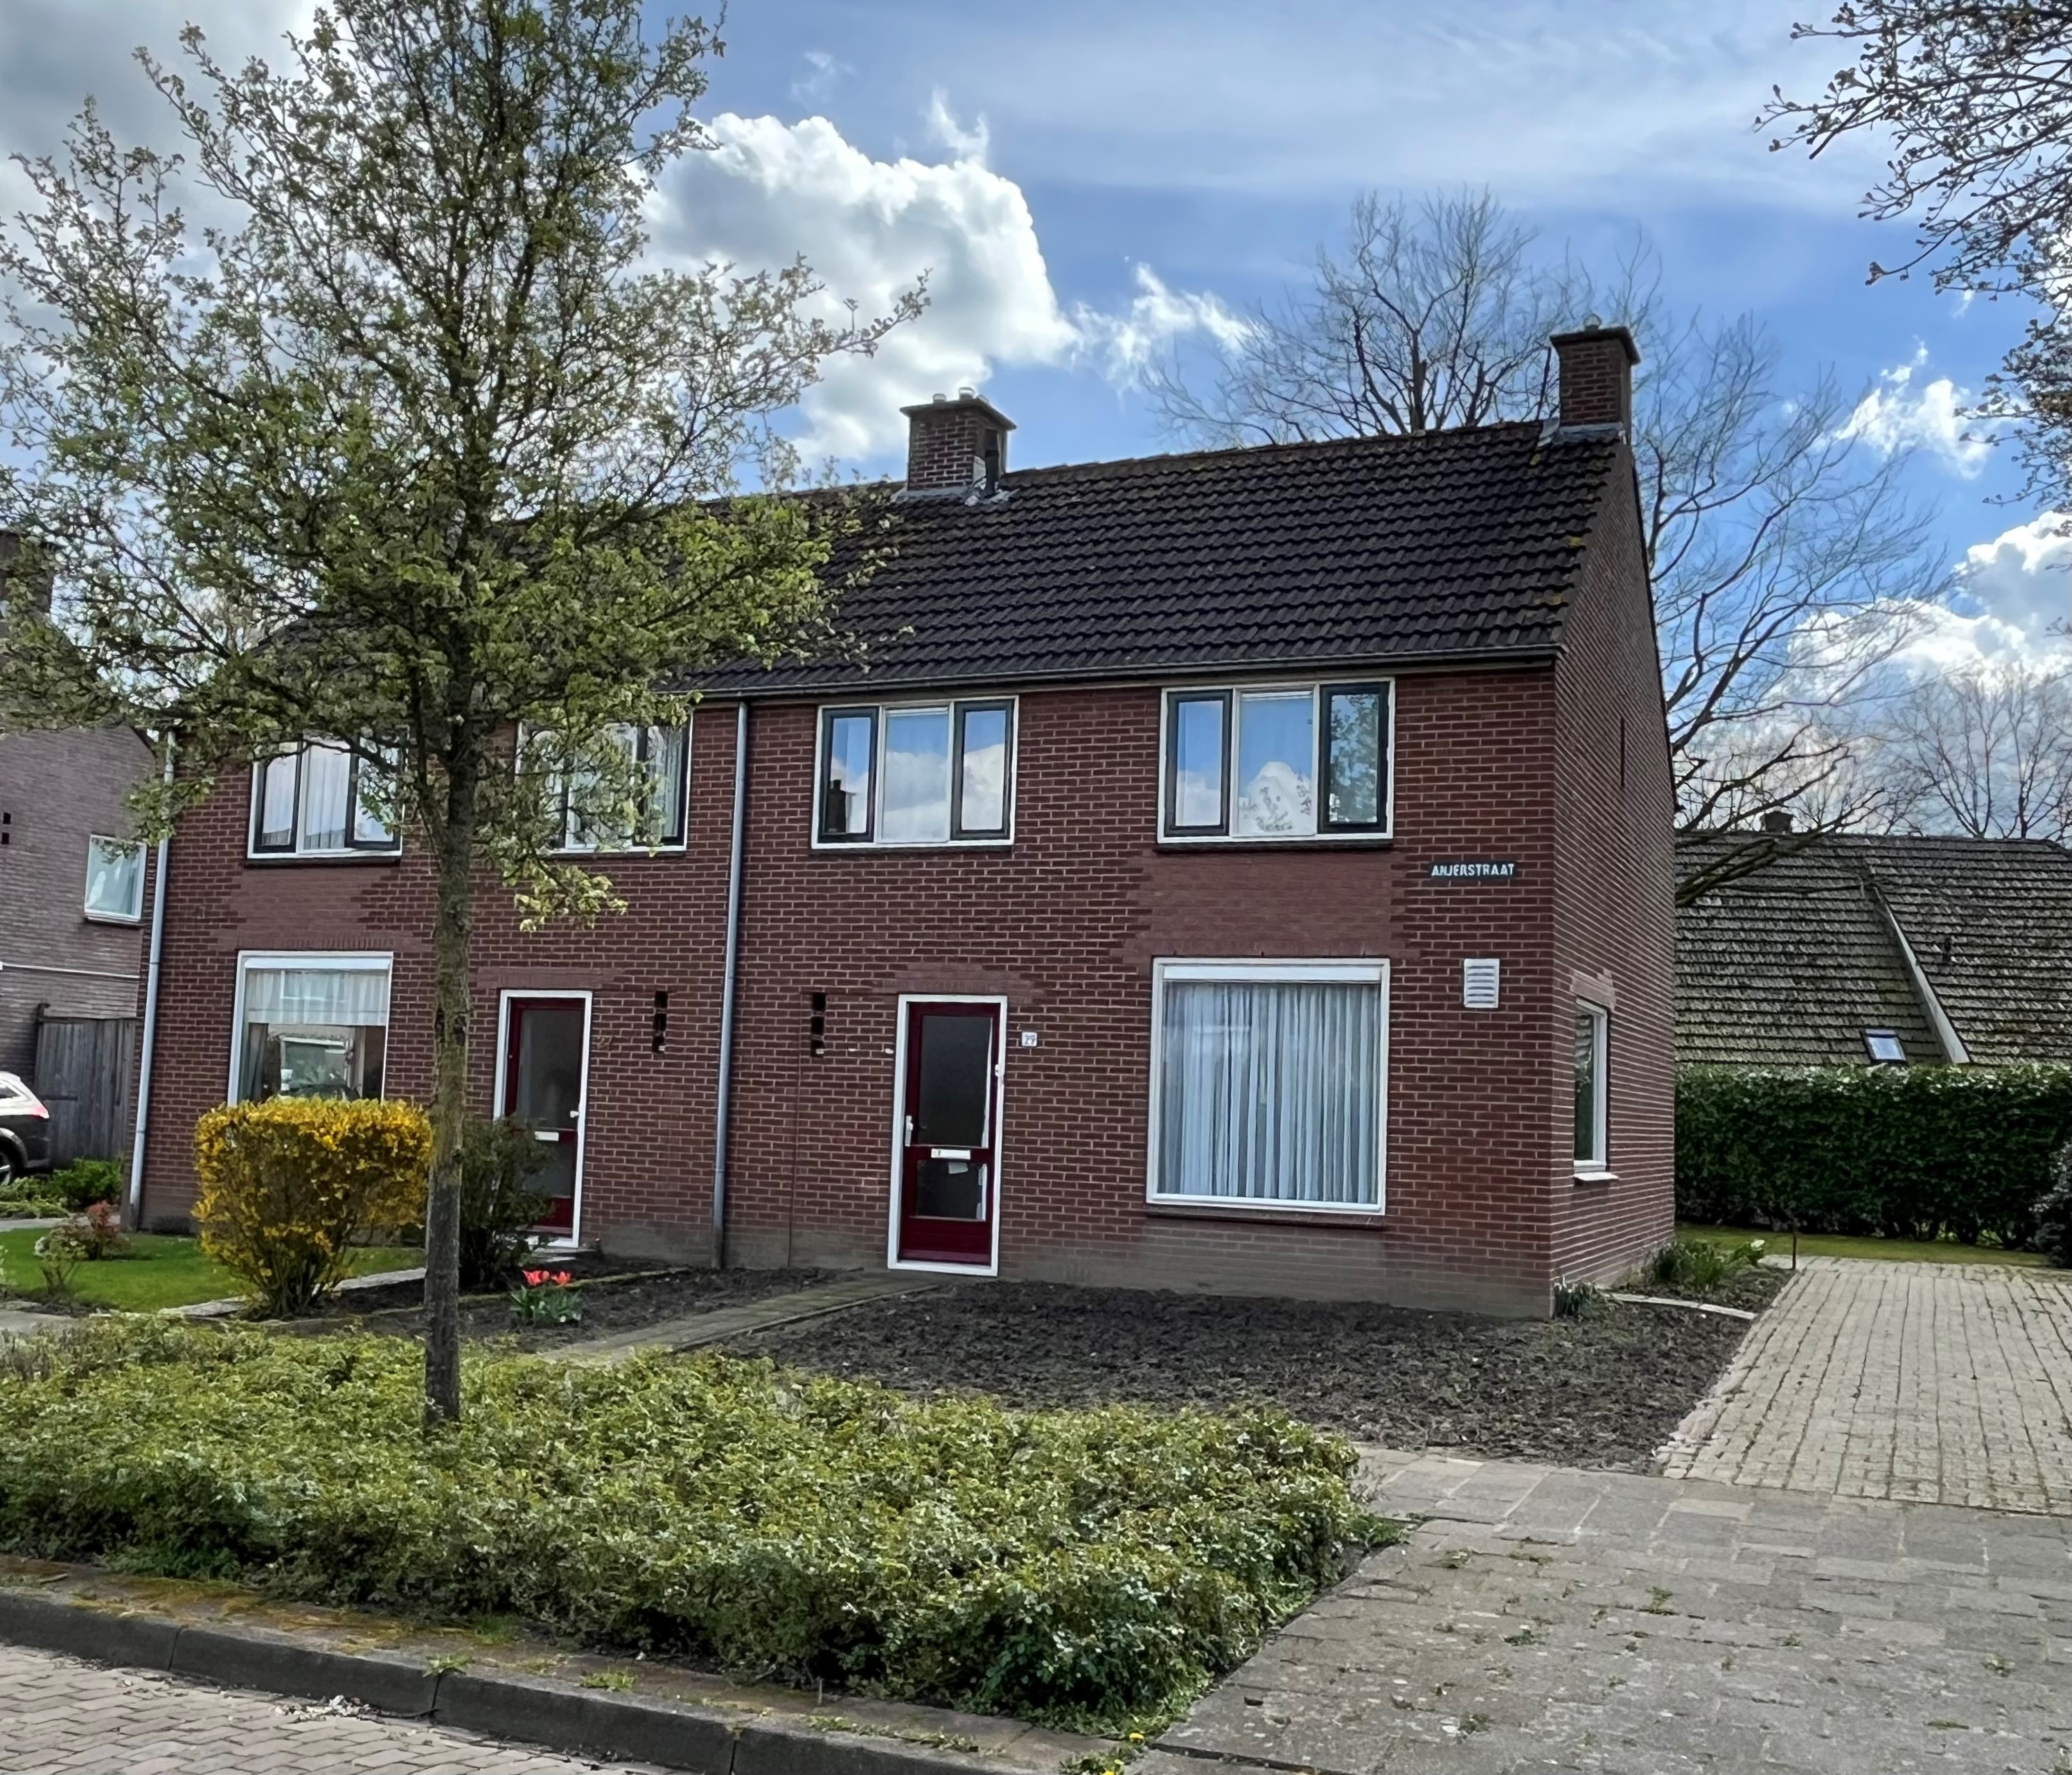 Anjerstraat 29, 7221 AR Steenderen, Nederland